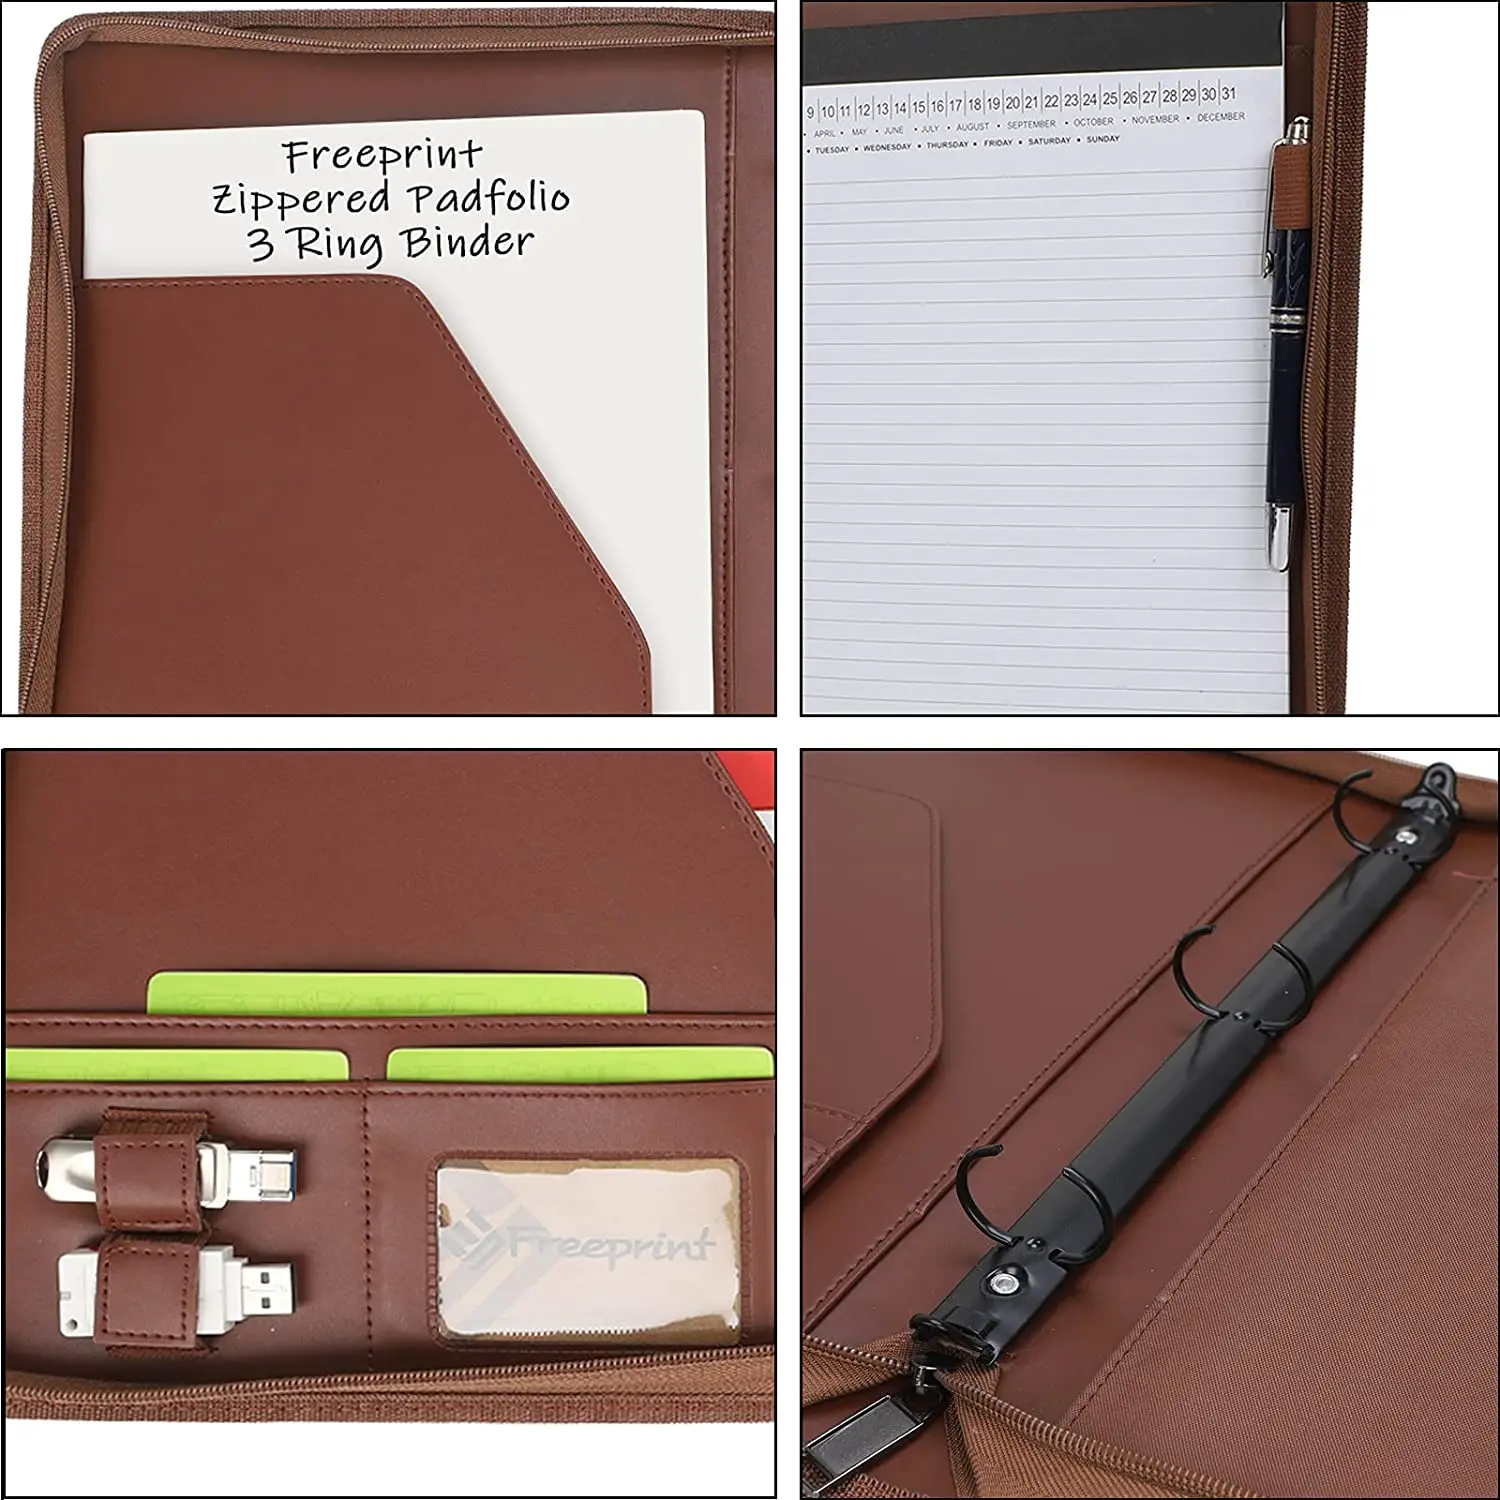 Zippered Portfolio 3 Ring Binder Organizer with Writing Pad Legal Size Letter - PU Leather Padfolio Document Organizer